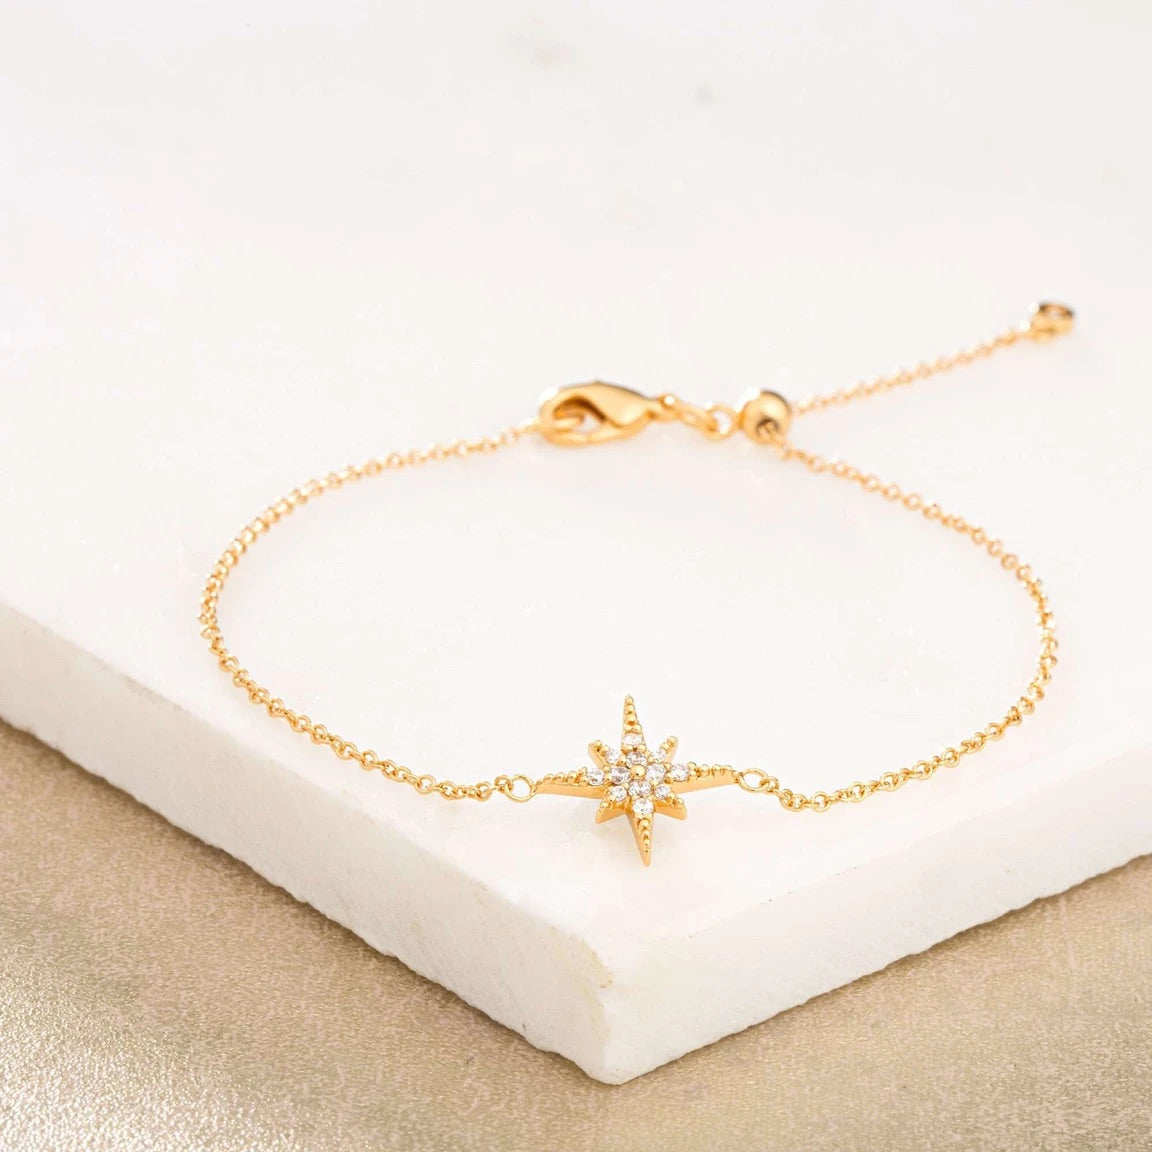 Starburst Bracelet with Slider Clasp - Gold